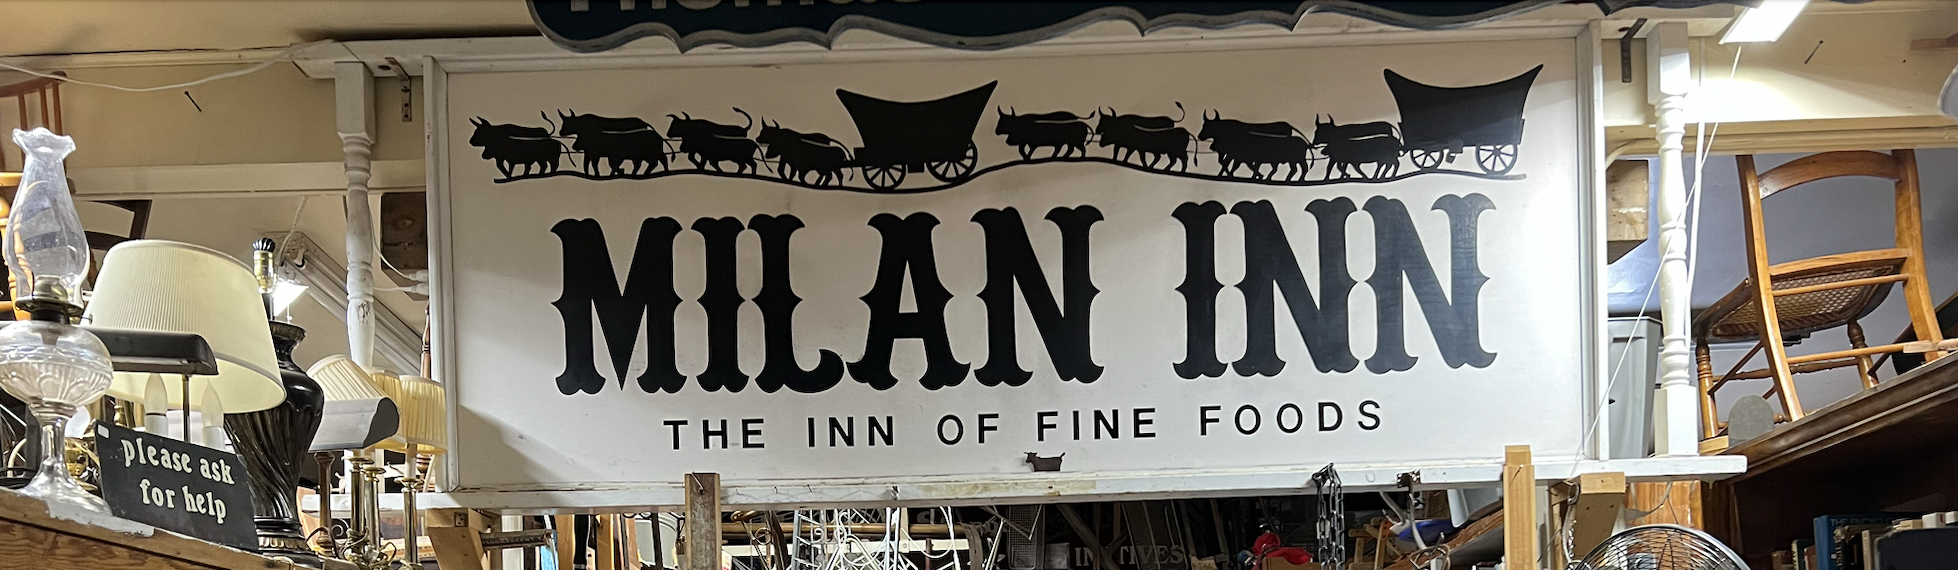 Milan Inn-tiques